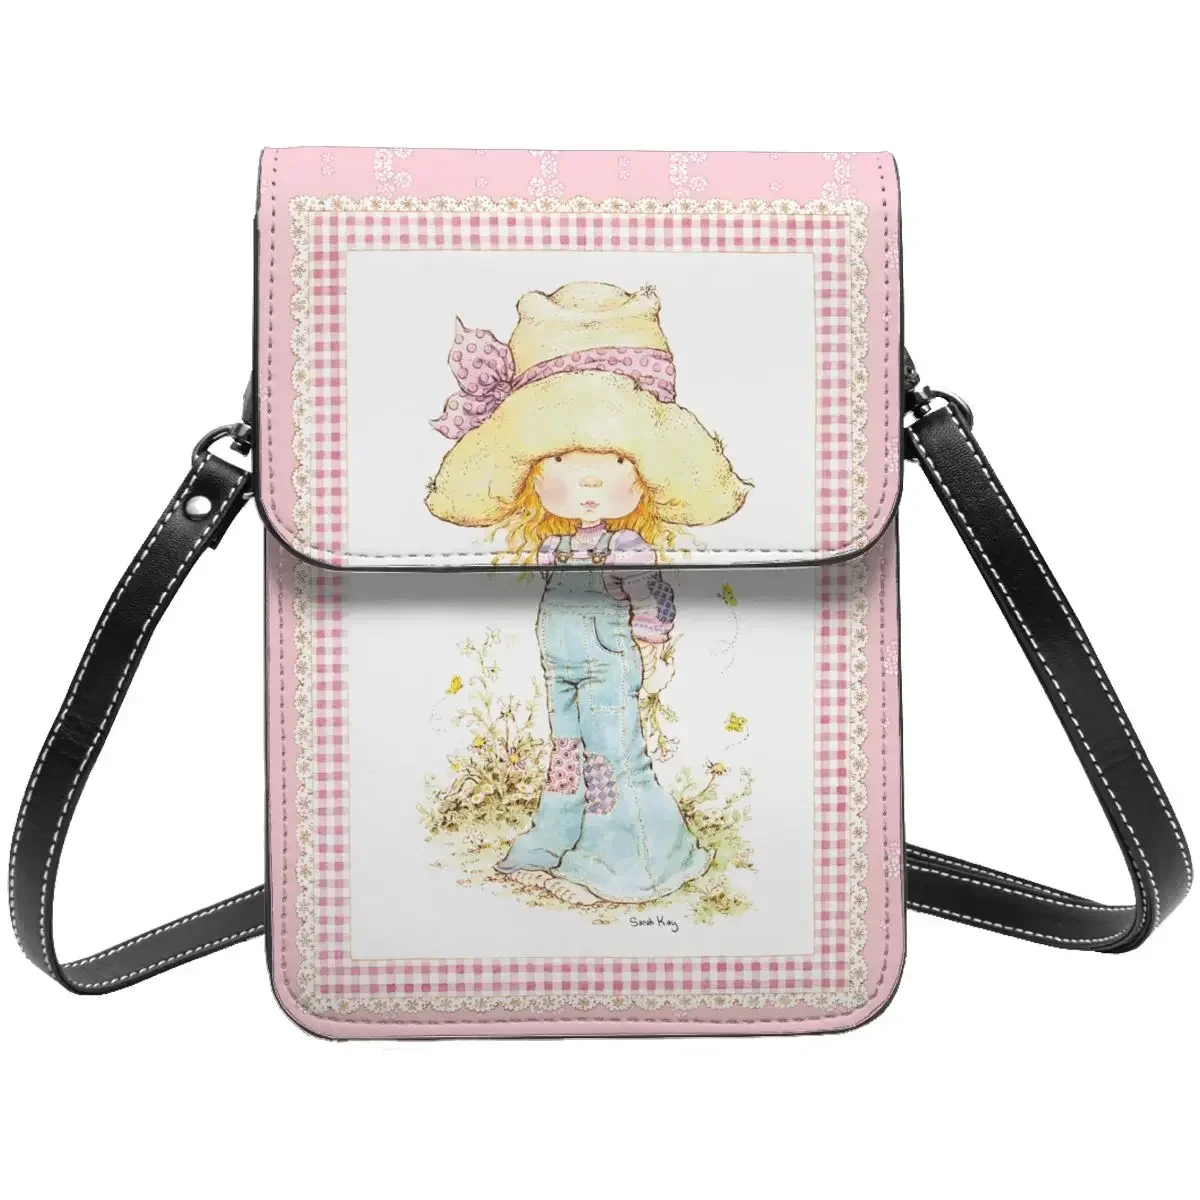 Cute Sarah Kay Girl Cartoon Leather Cell Phone Purse Accessories Fashionable Girl Mini Shoulder Bag Card Case Durable